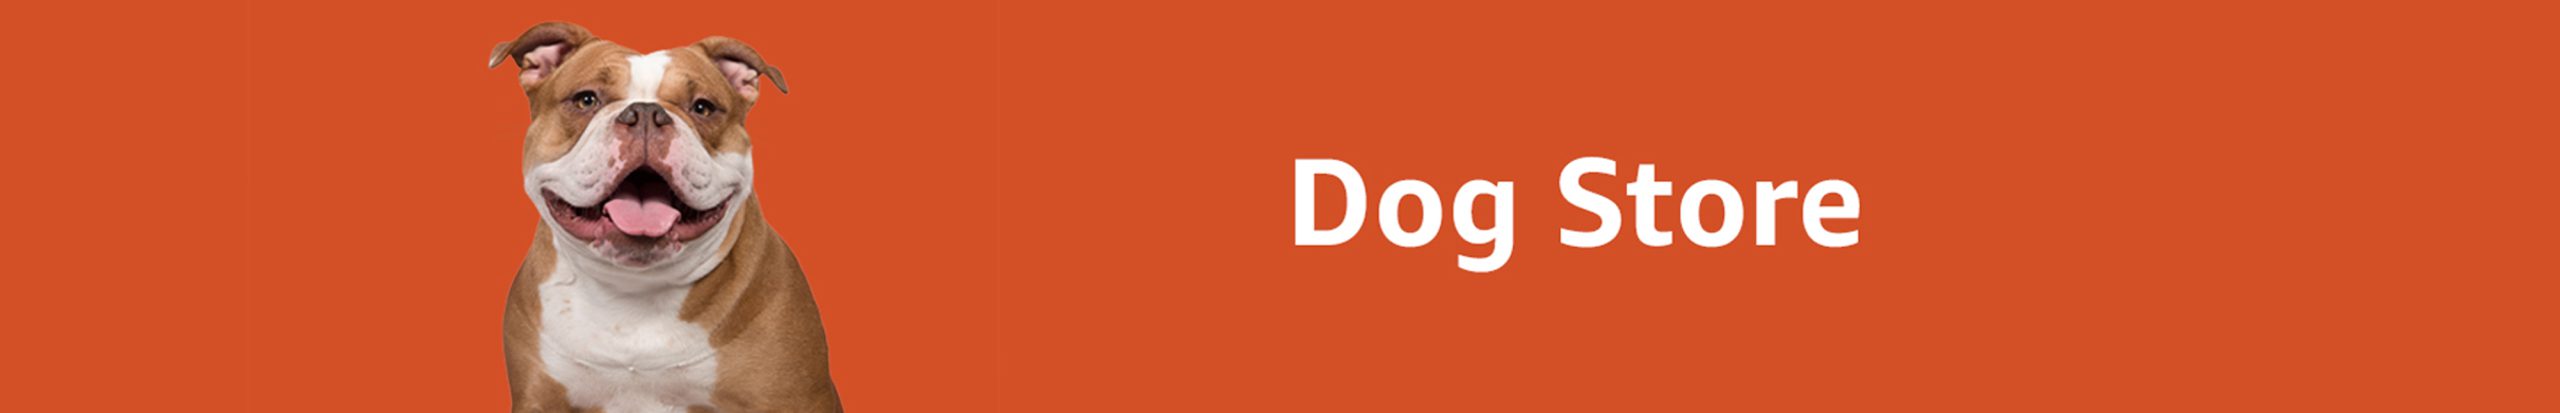 dog store banner3